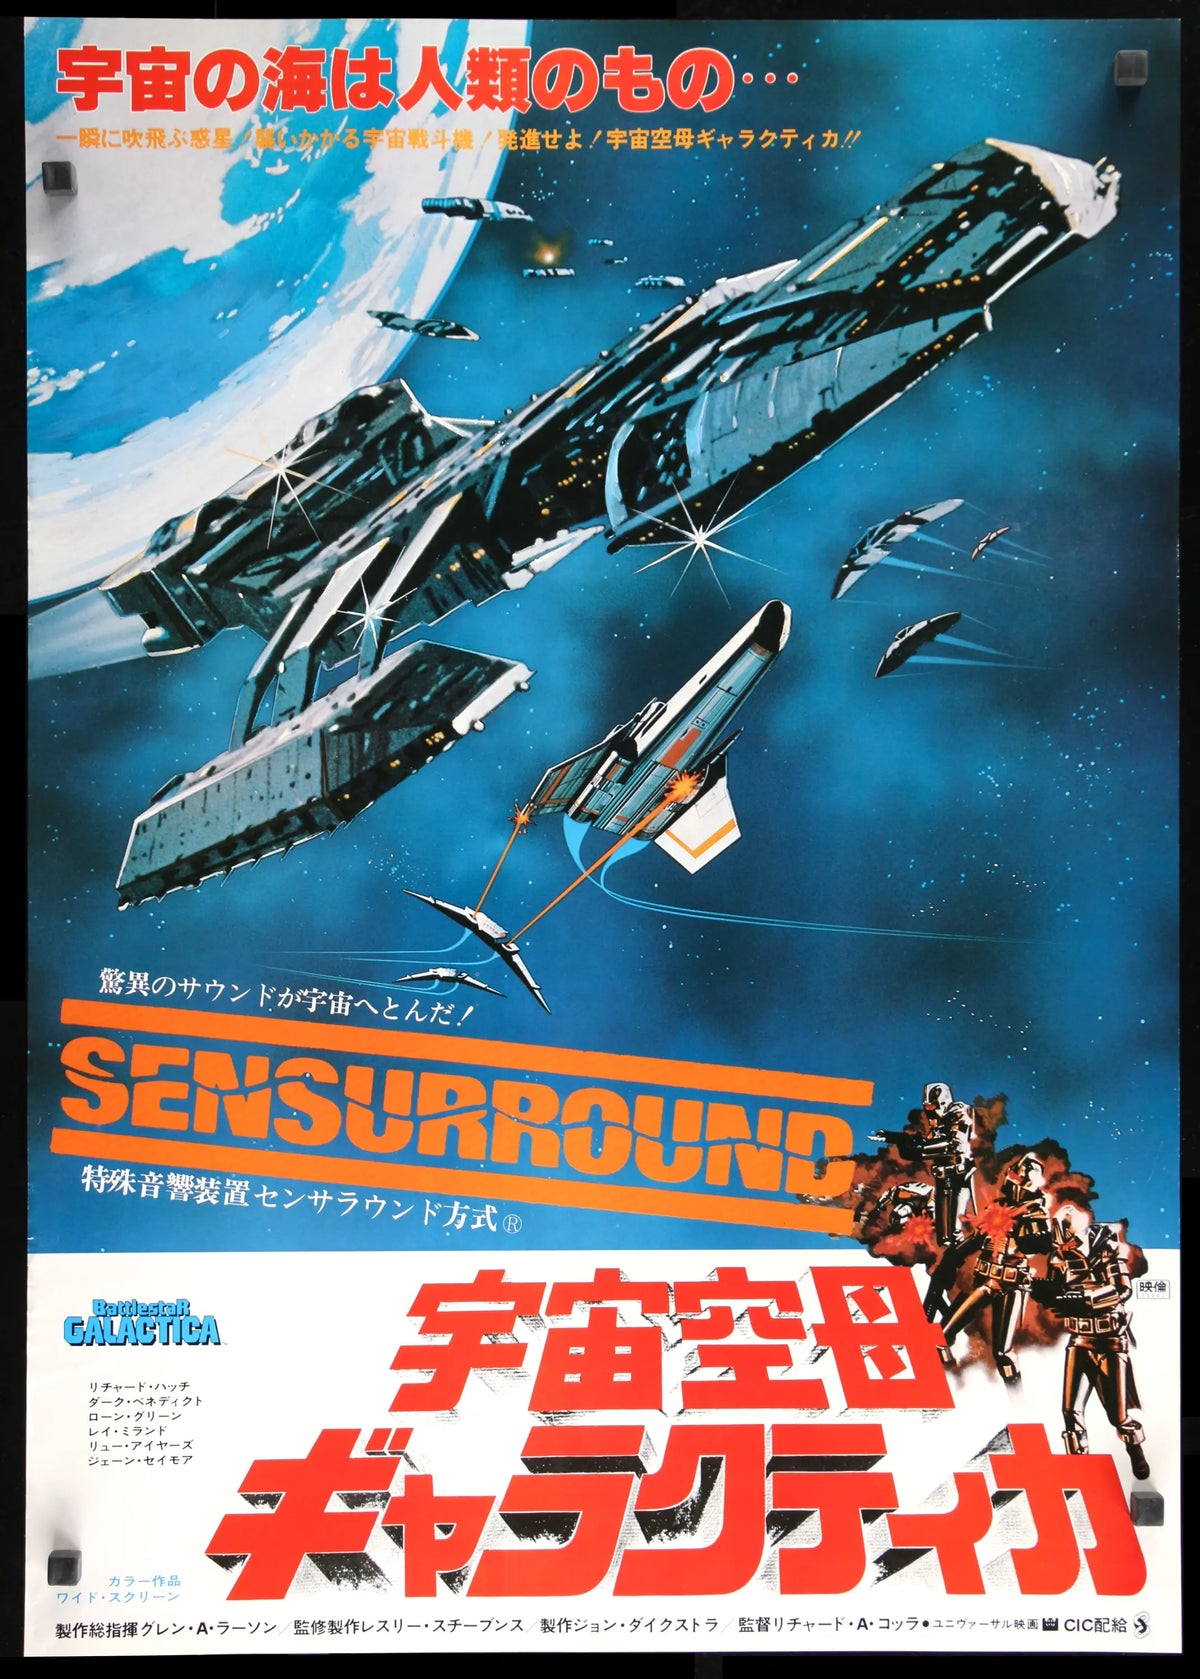 Battlestar Galactica (1978) original movie poster for sale at Original Film Art